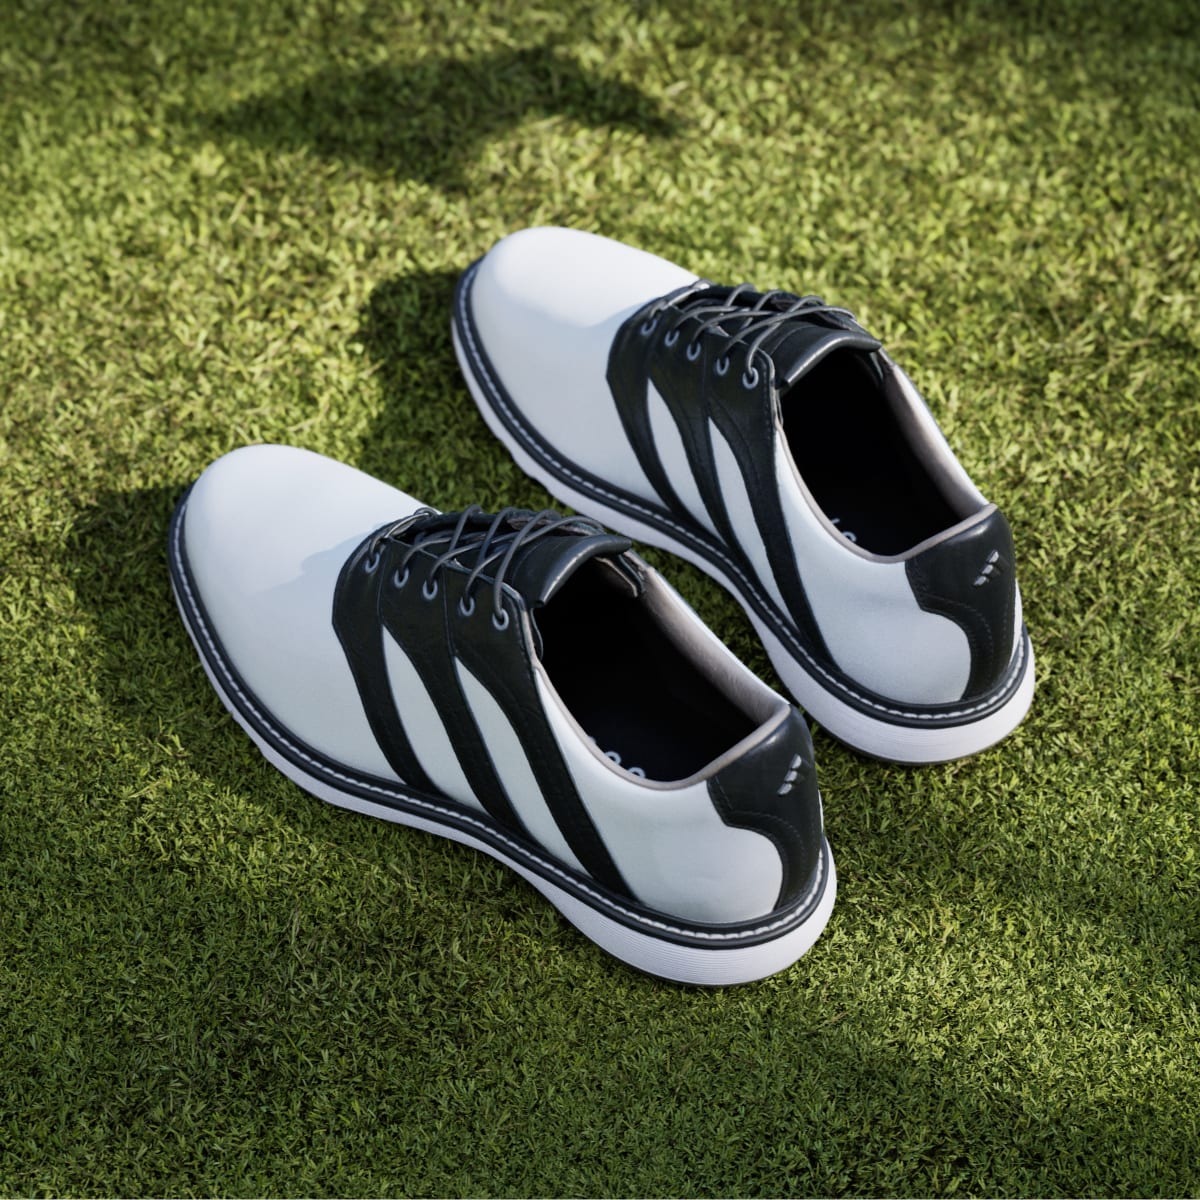 Adidas MC Z-Traxion Spikeless Golf Shoes. 7